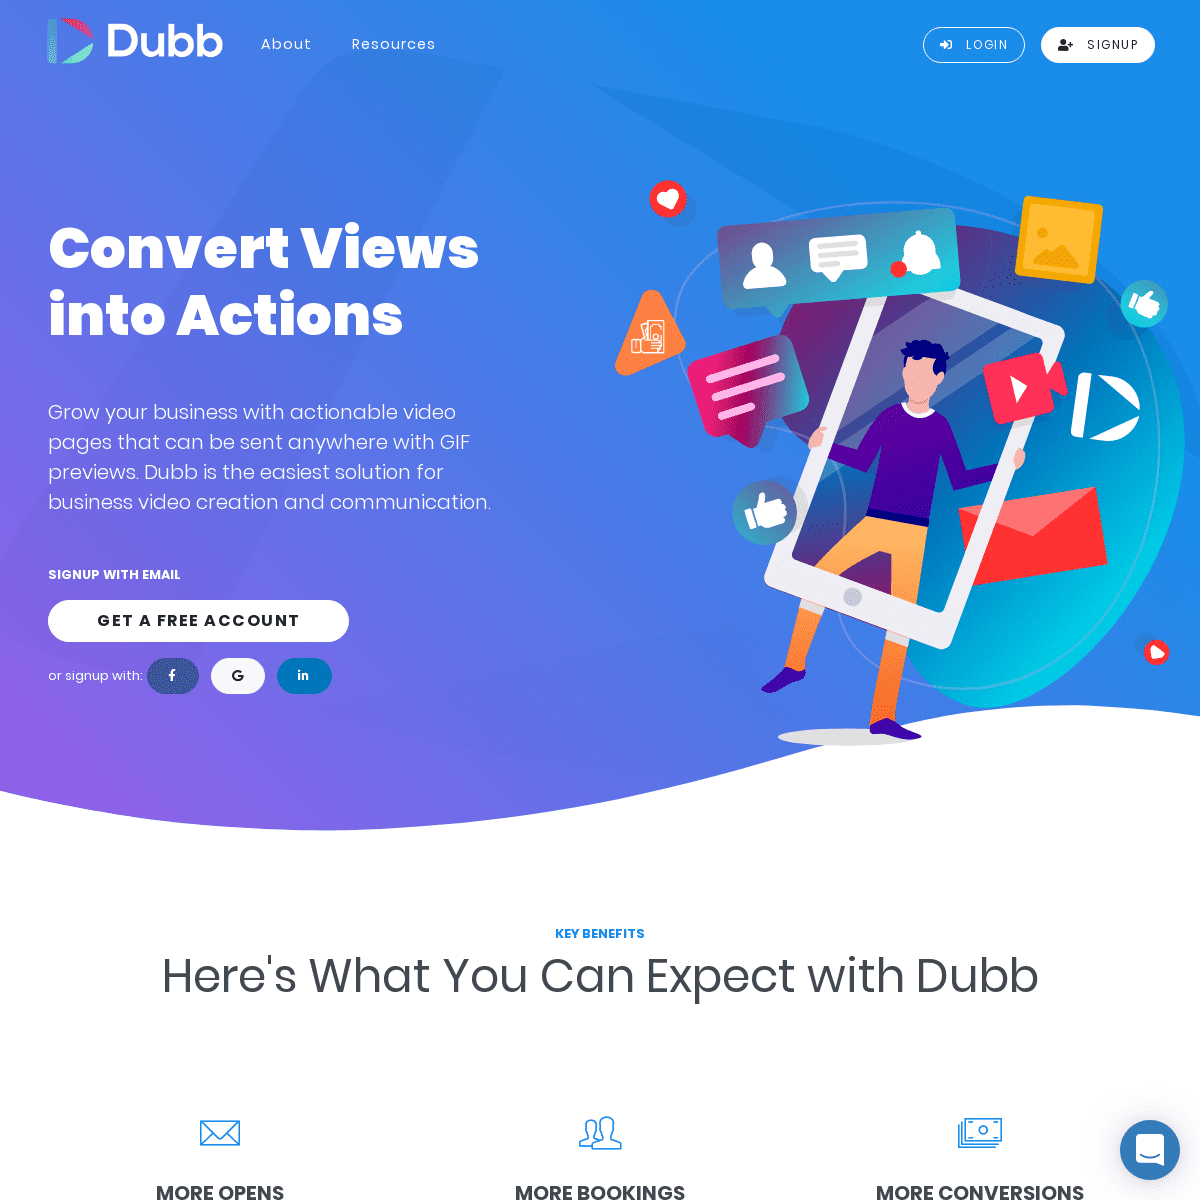 A complete backup of dubb.com